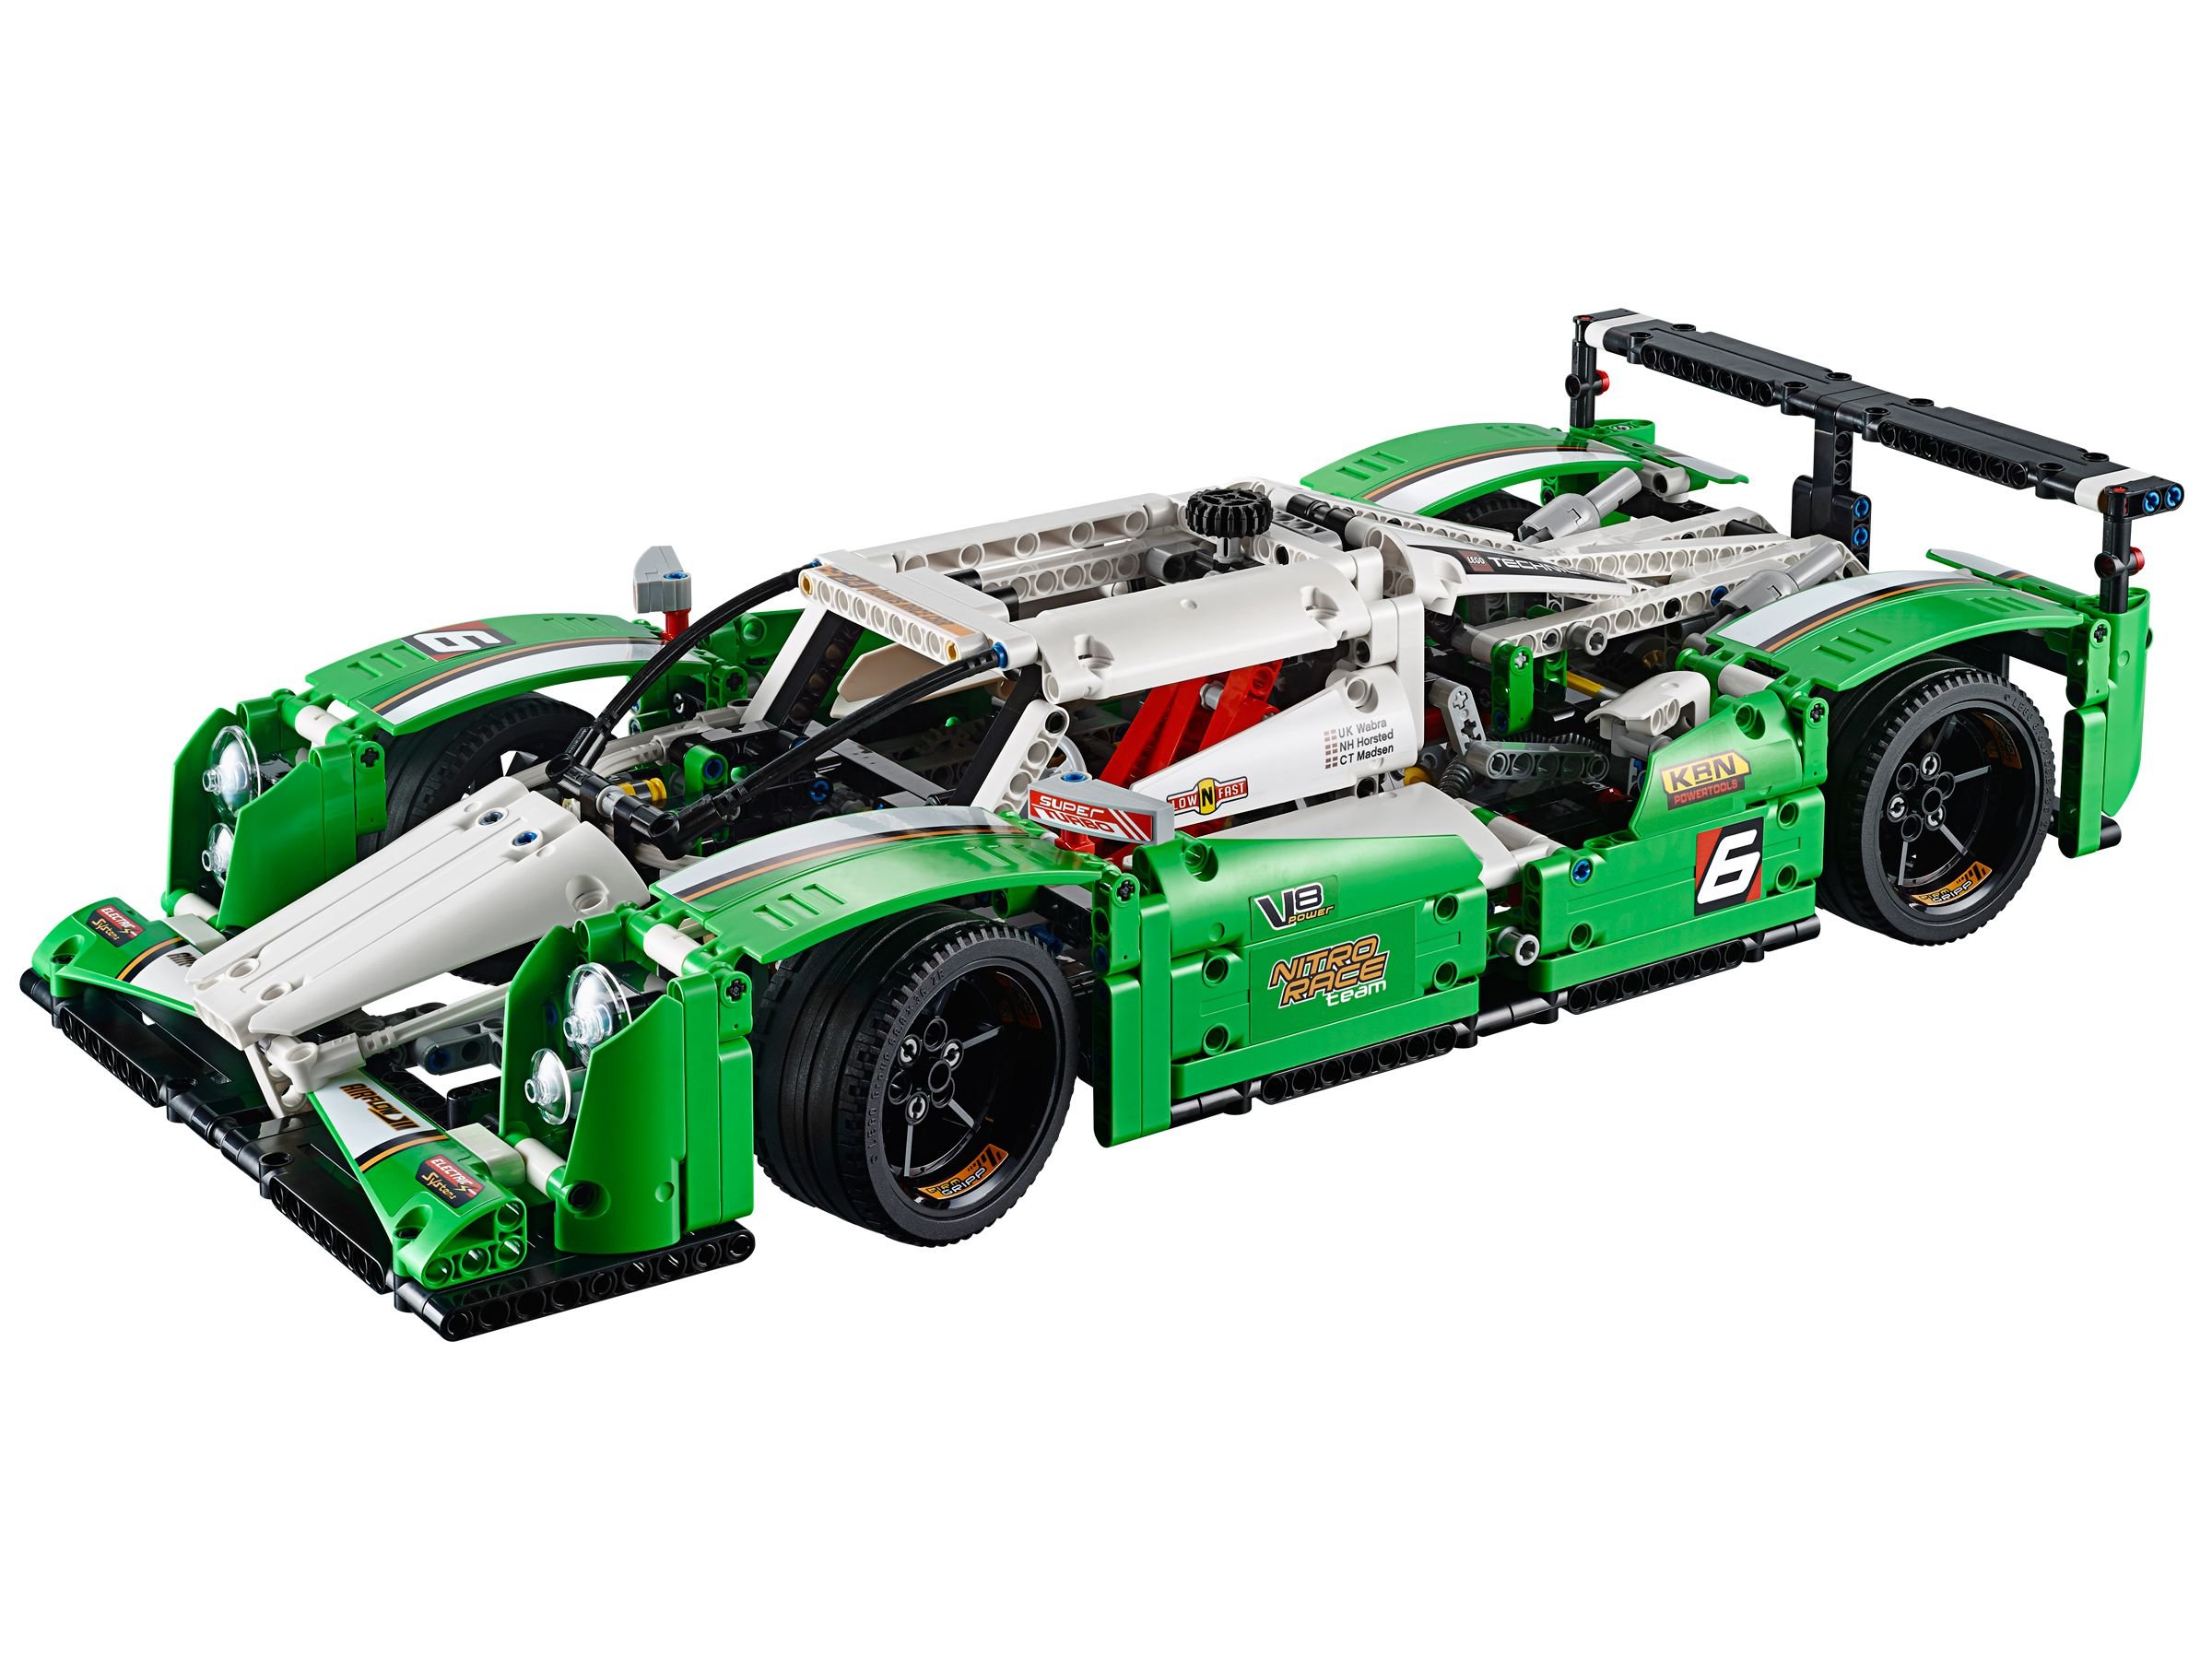 LEGO Technic 42039 Langstrecken-Rennwagen LEGO_42039.jpg